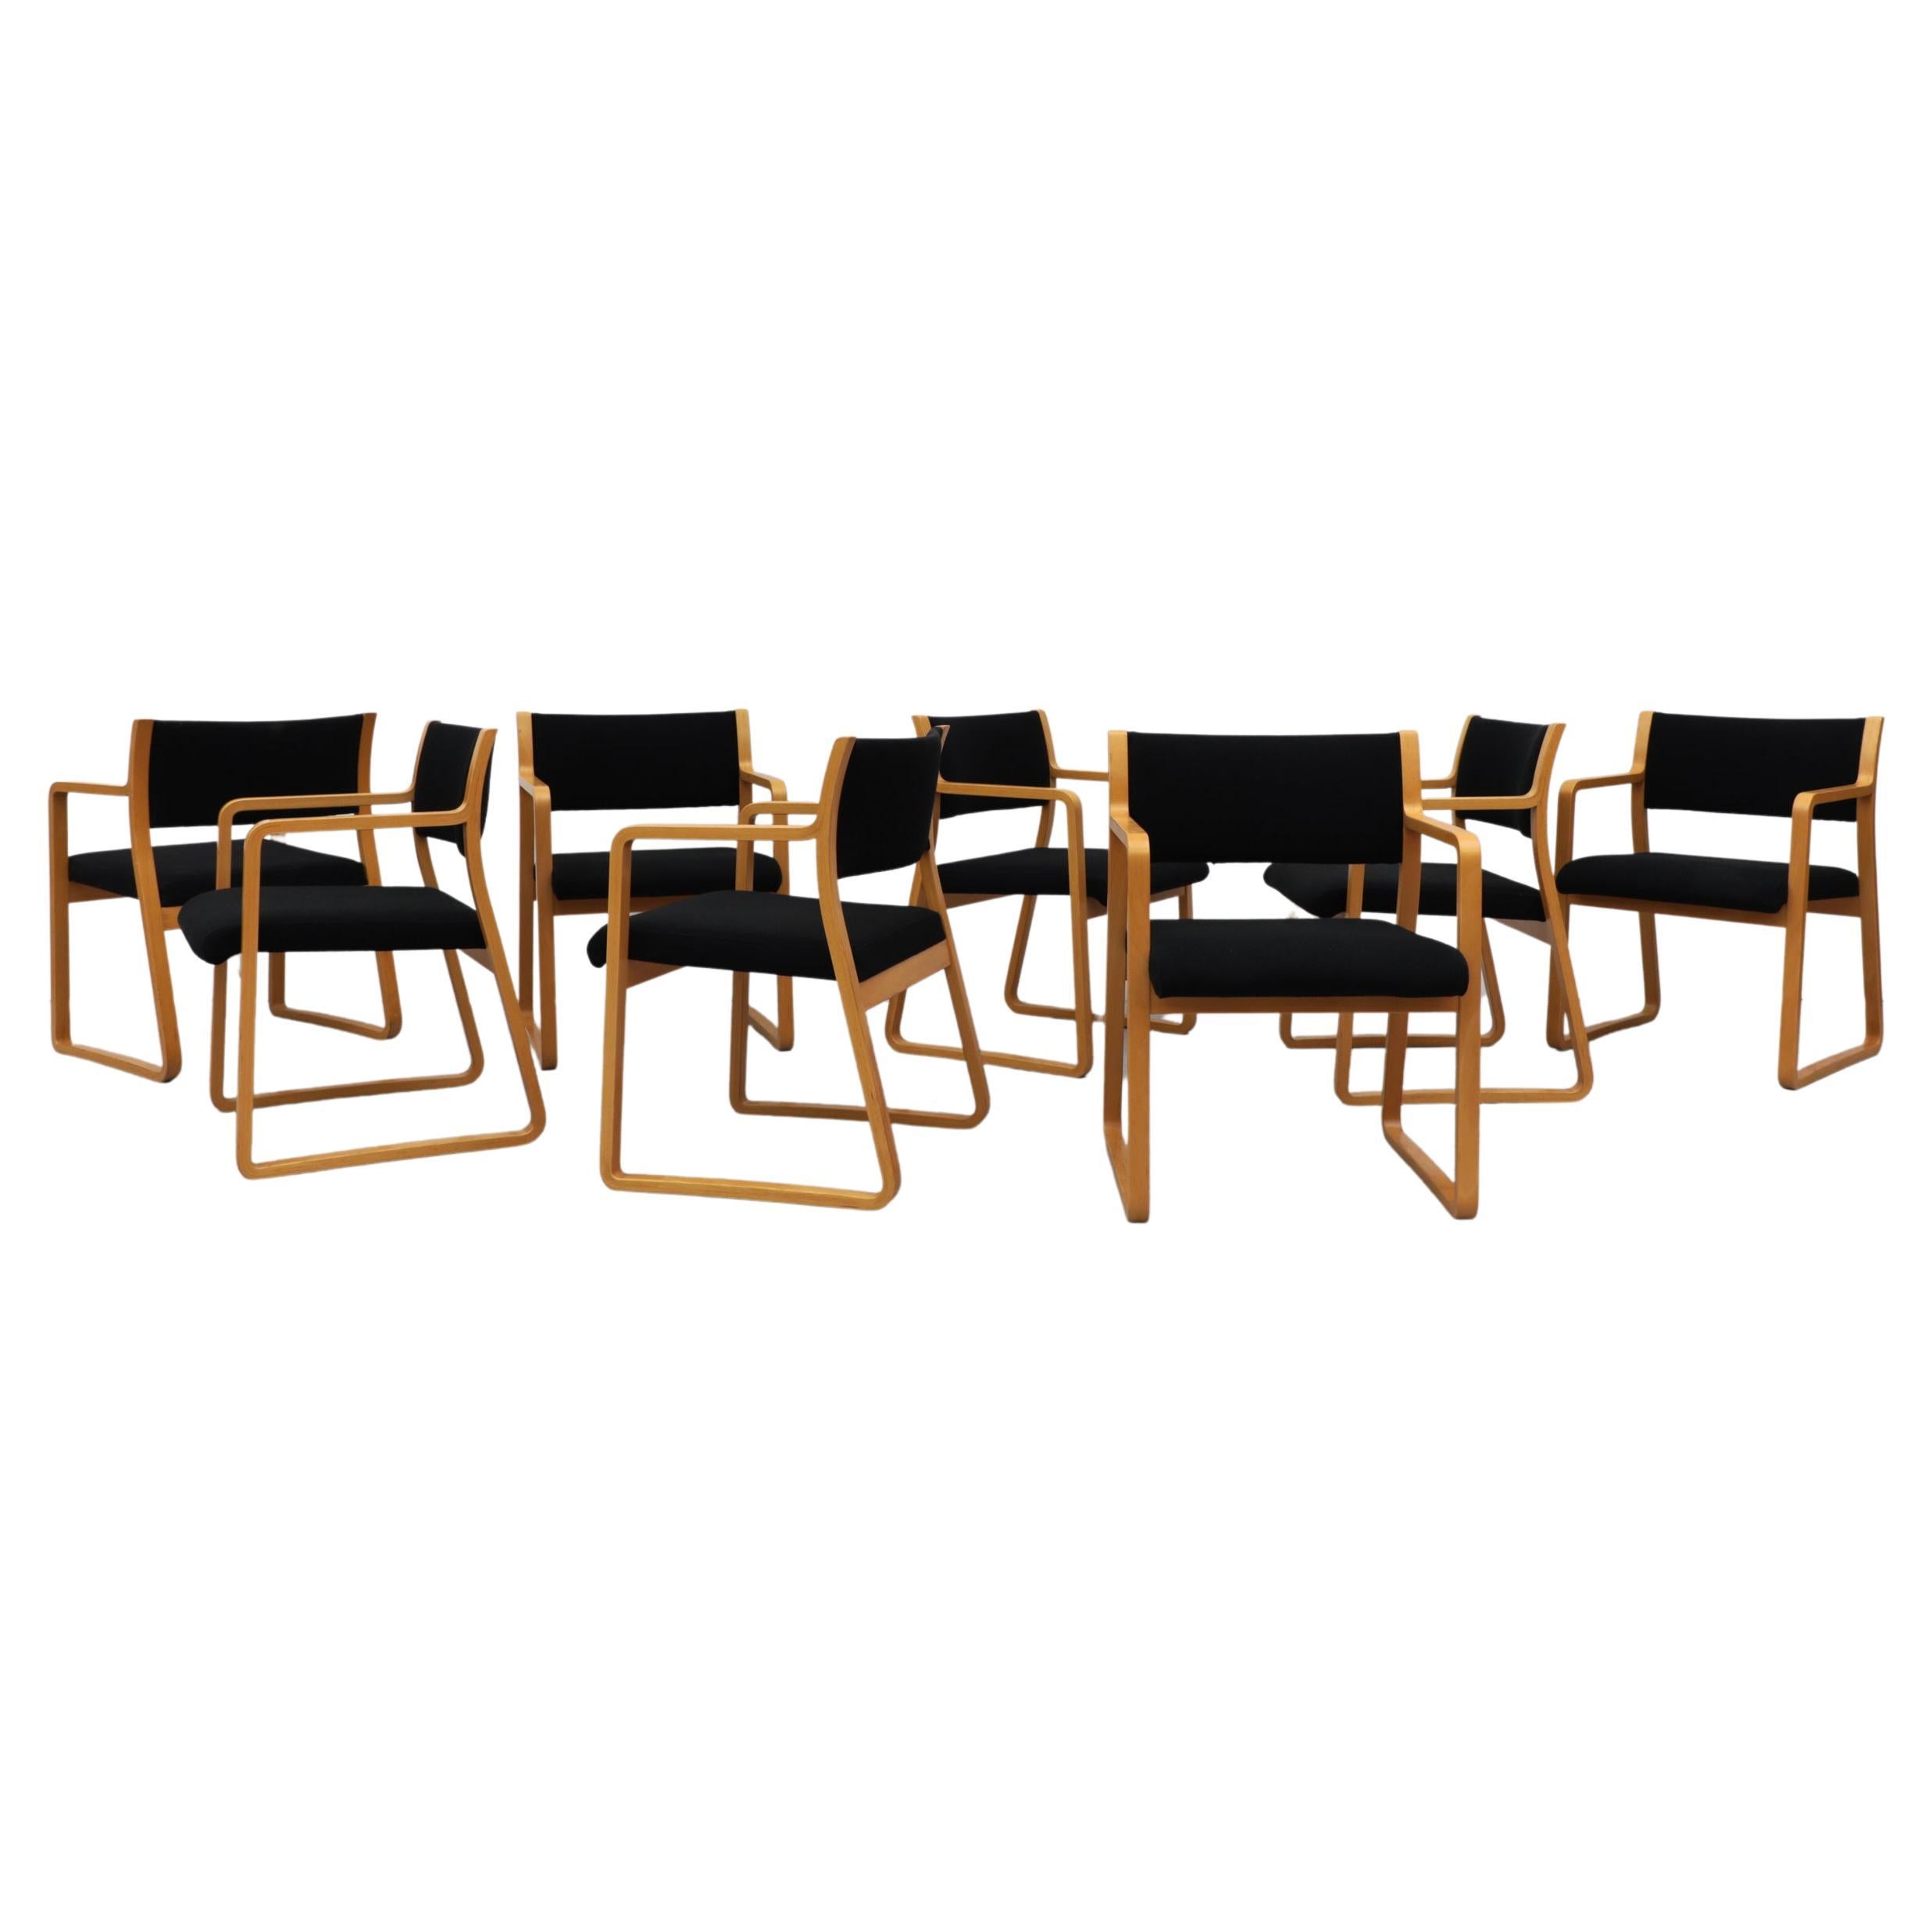 Set of 8 Alvar Aalto Style Danish Chairs